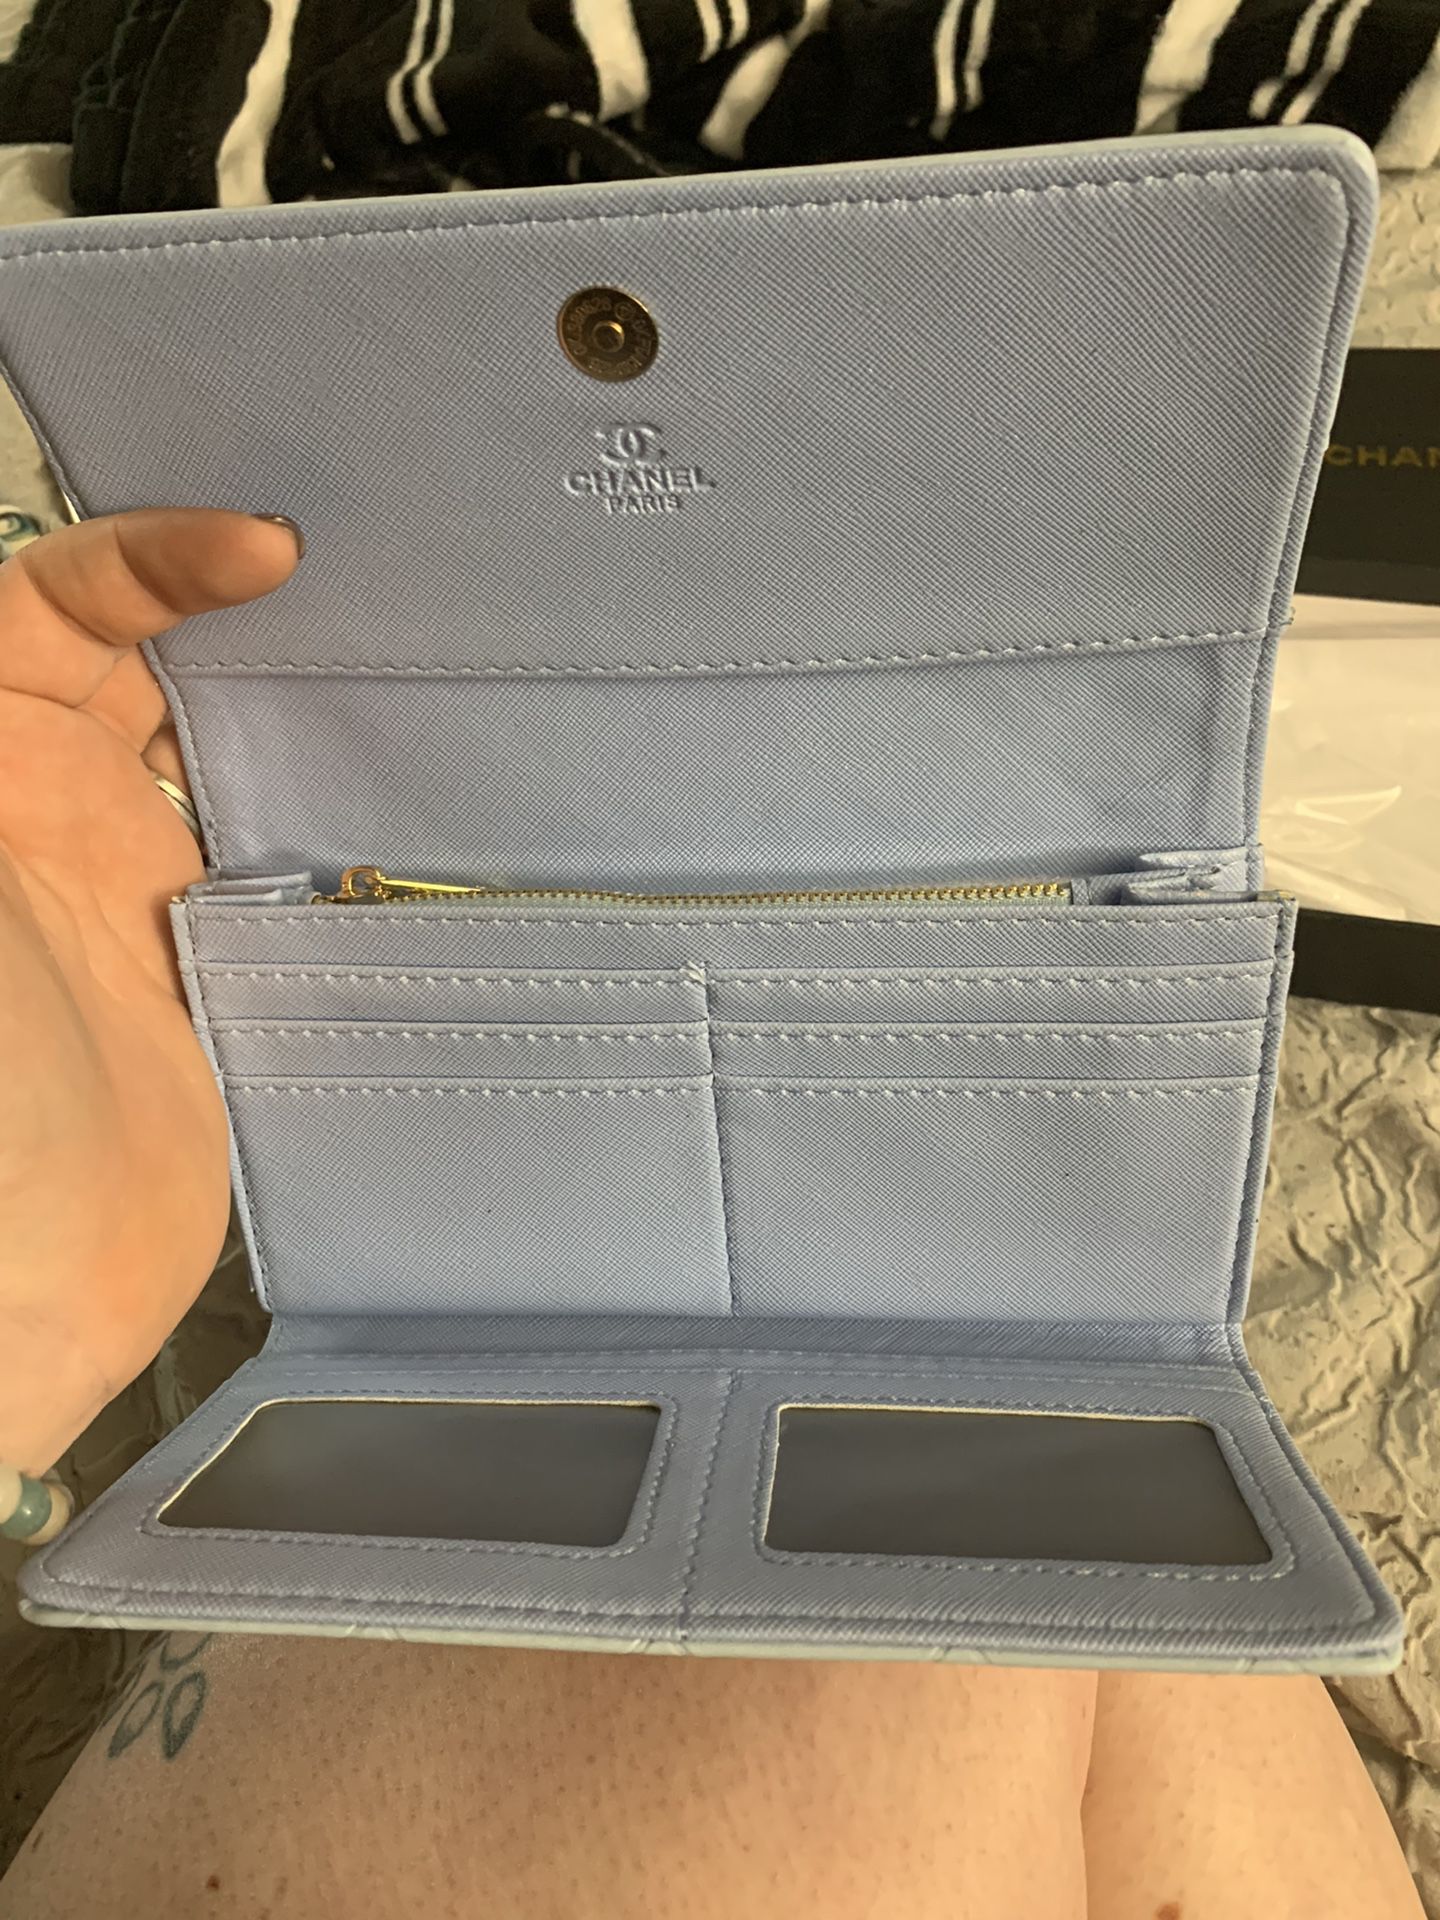 New Chanel Mini O Case Pouch Wallet for Sale in Everett, WA - OfferUp